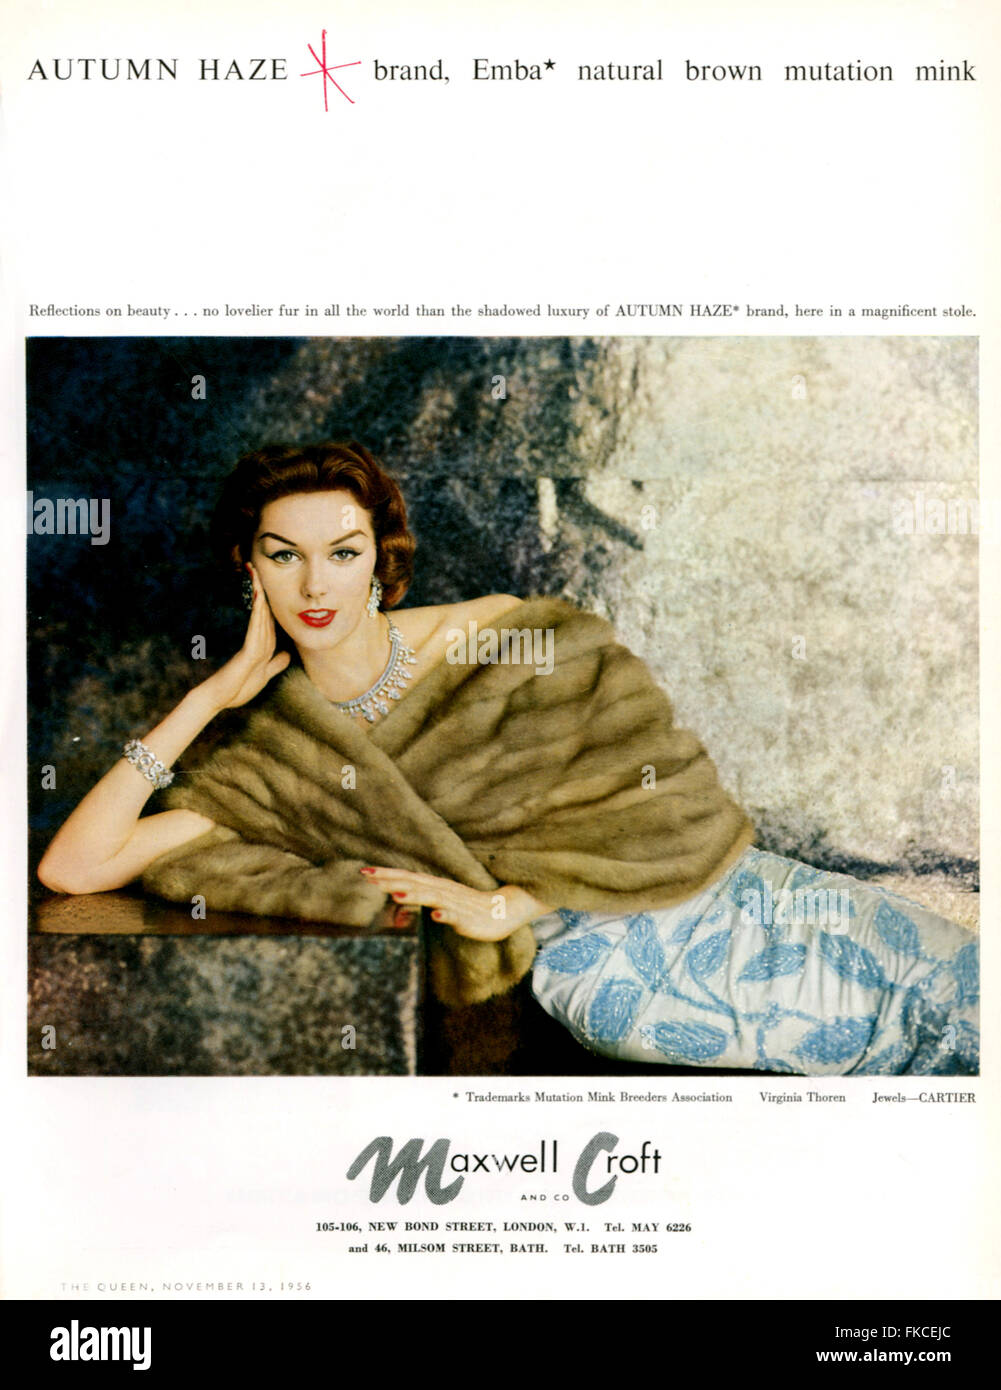 1950s UK Maxwell Croft & Co Magazine Advert Stock Photo